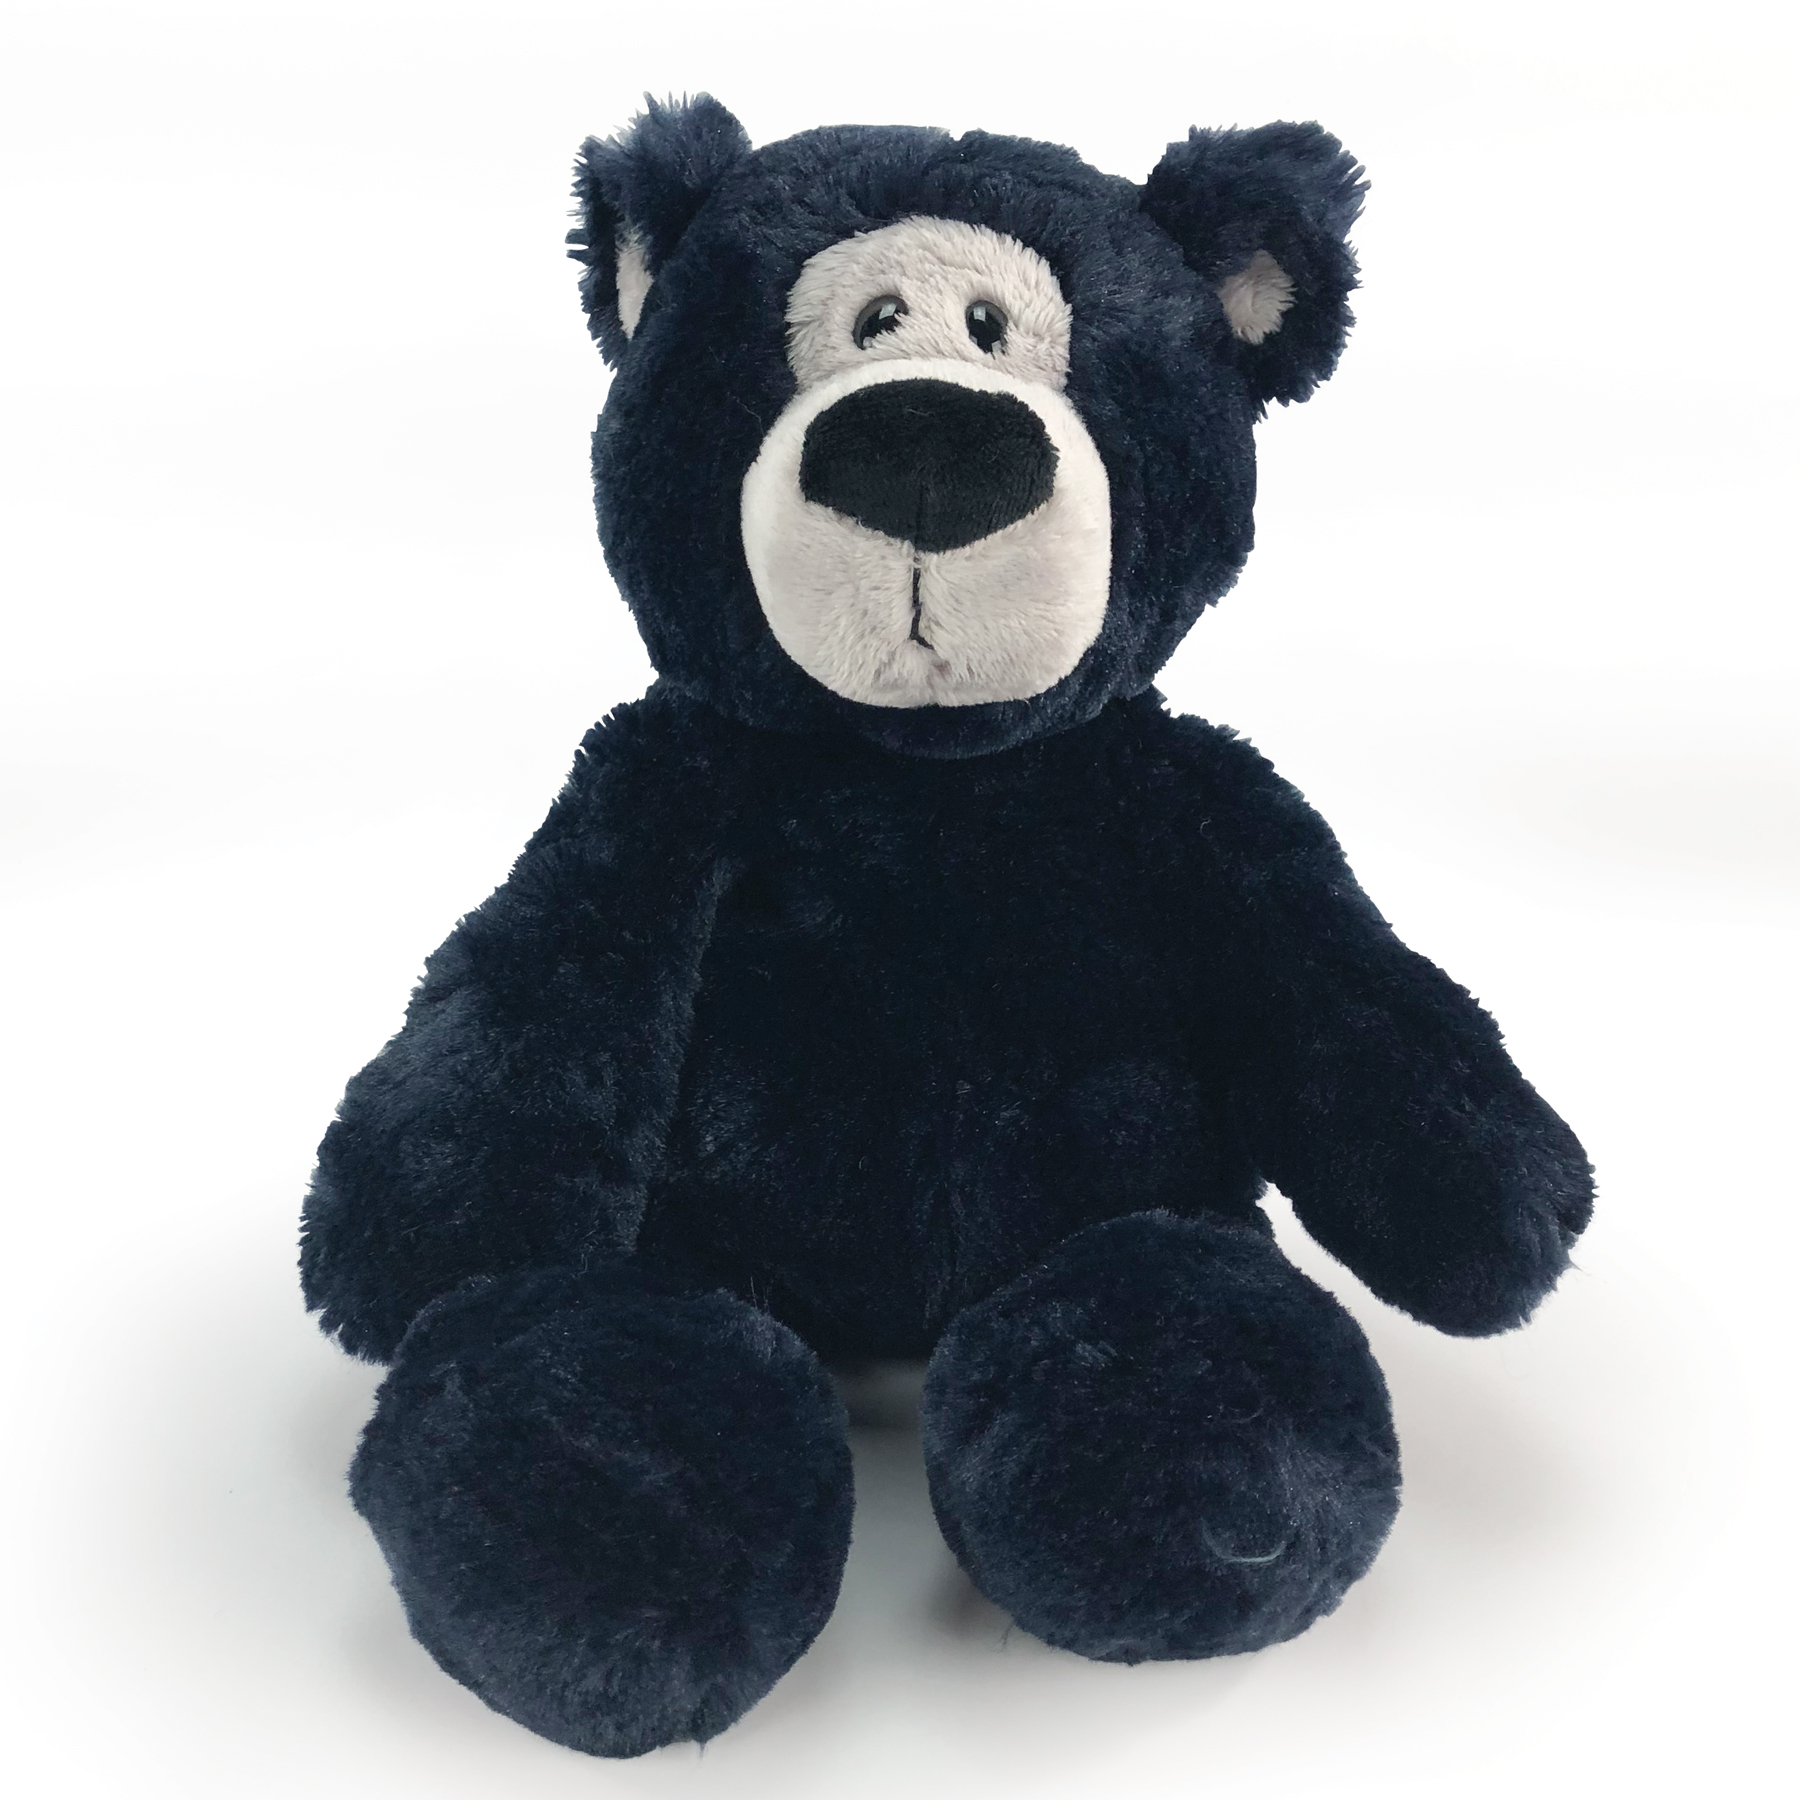 Stuffed Black Bear | Stuffed Teddy Bear